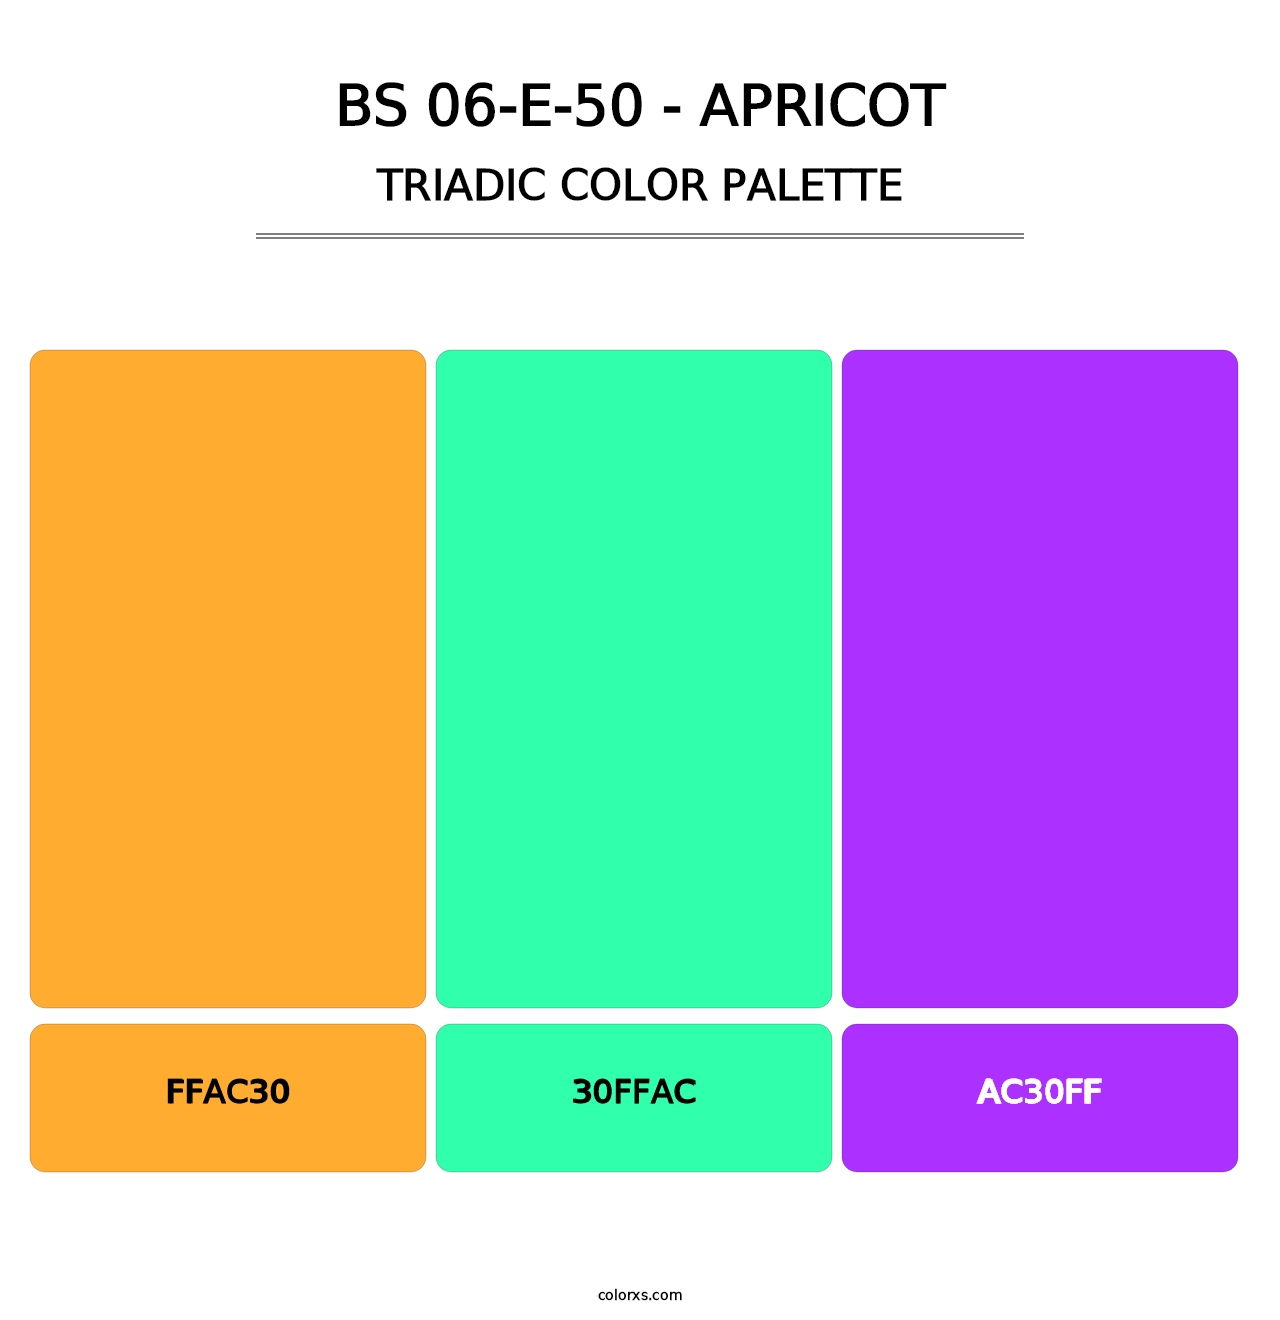 BS 06-E-50 - Apricot - Triadic Color Palette